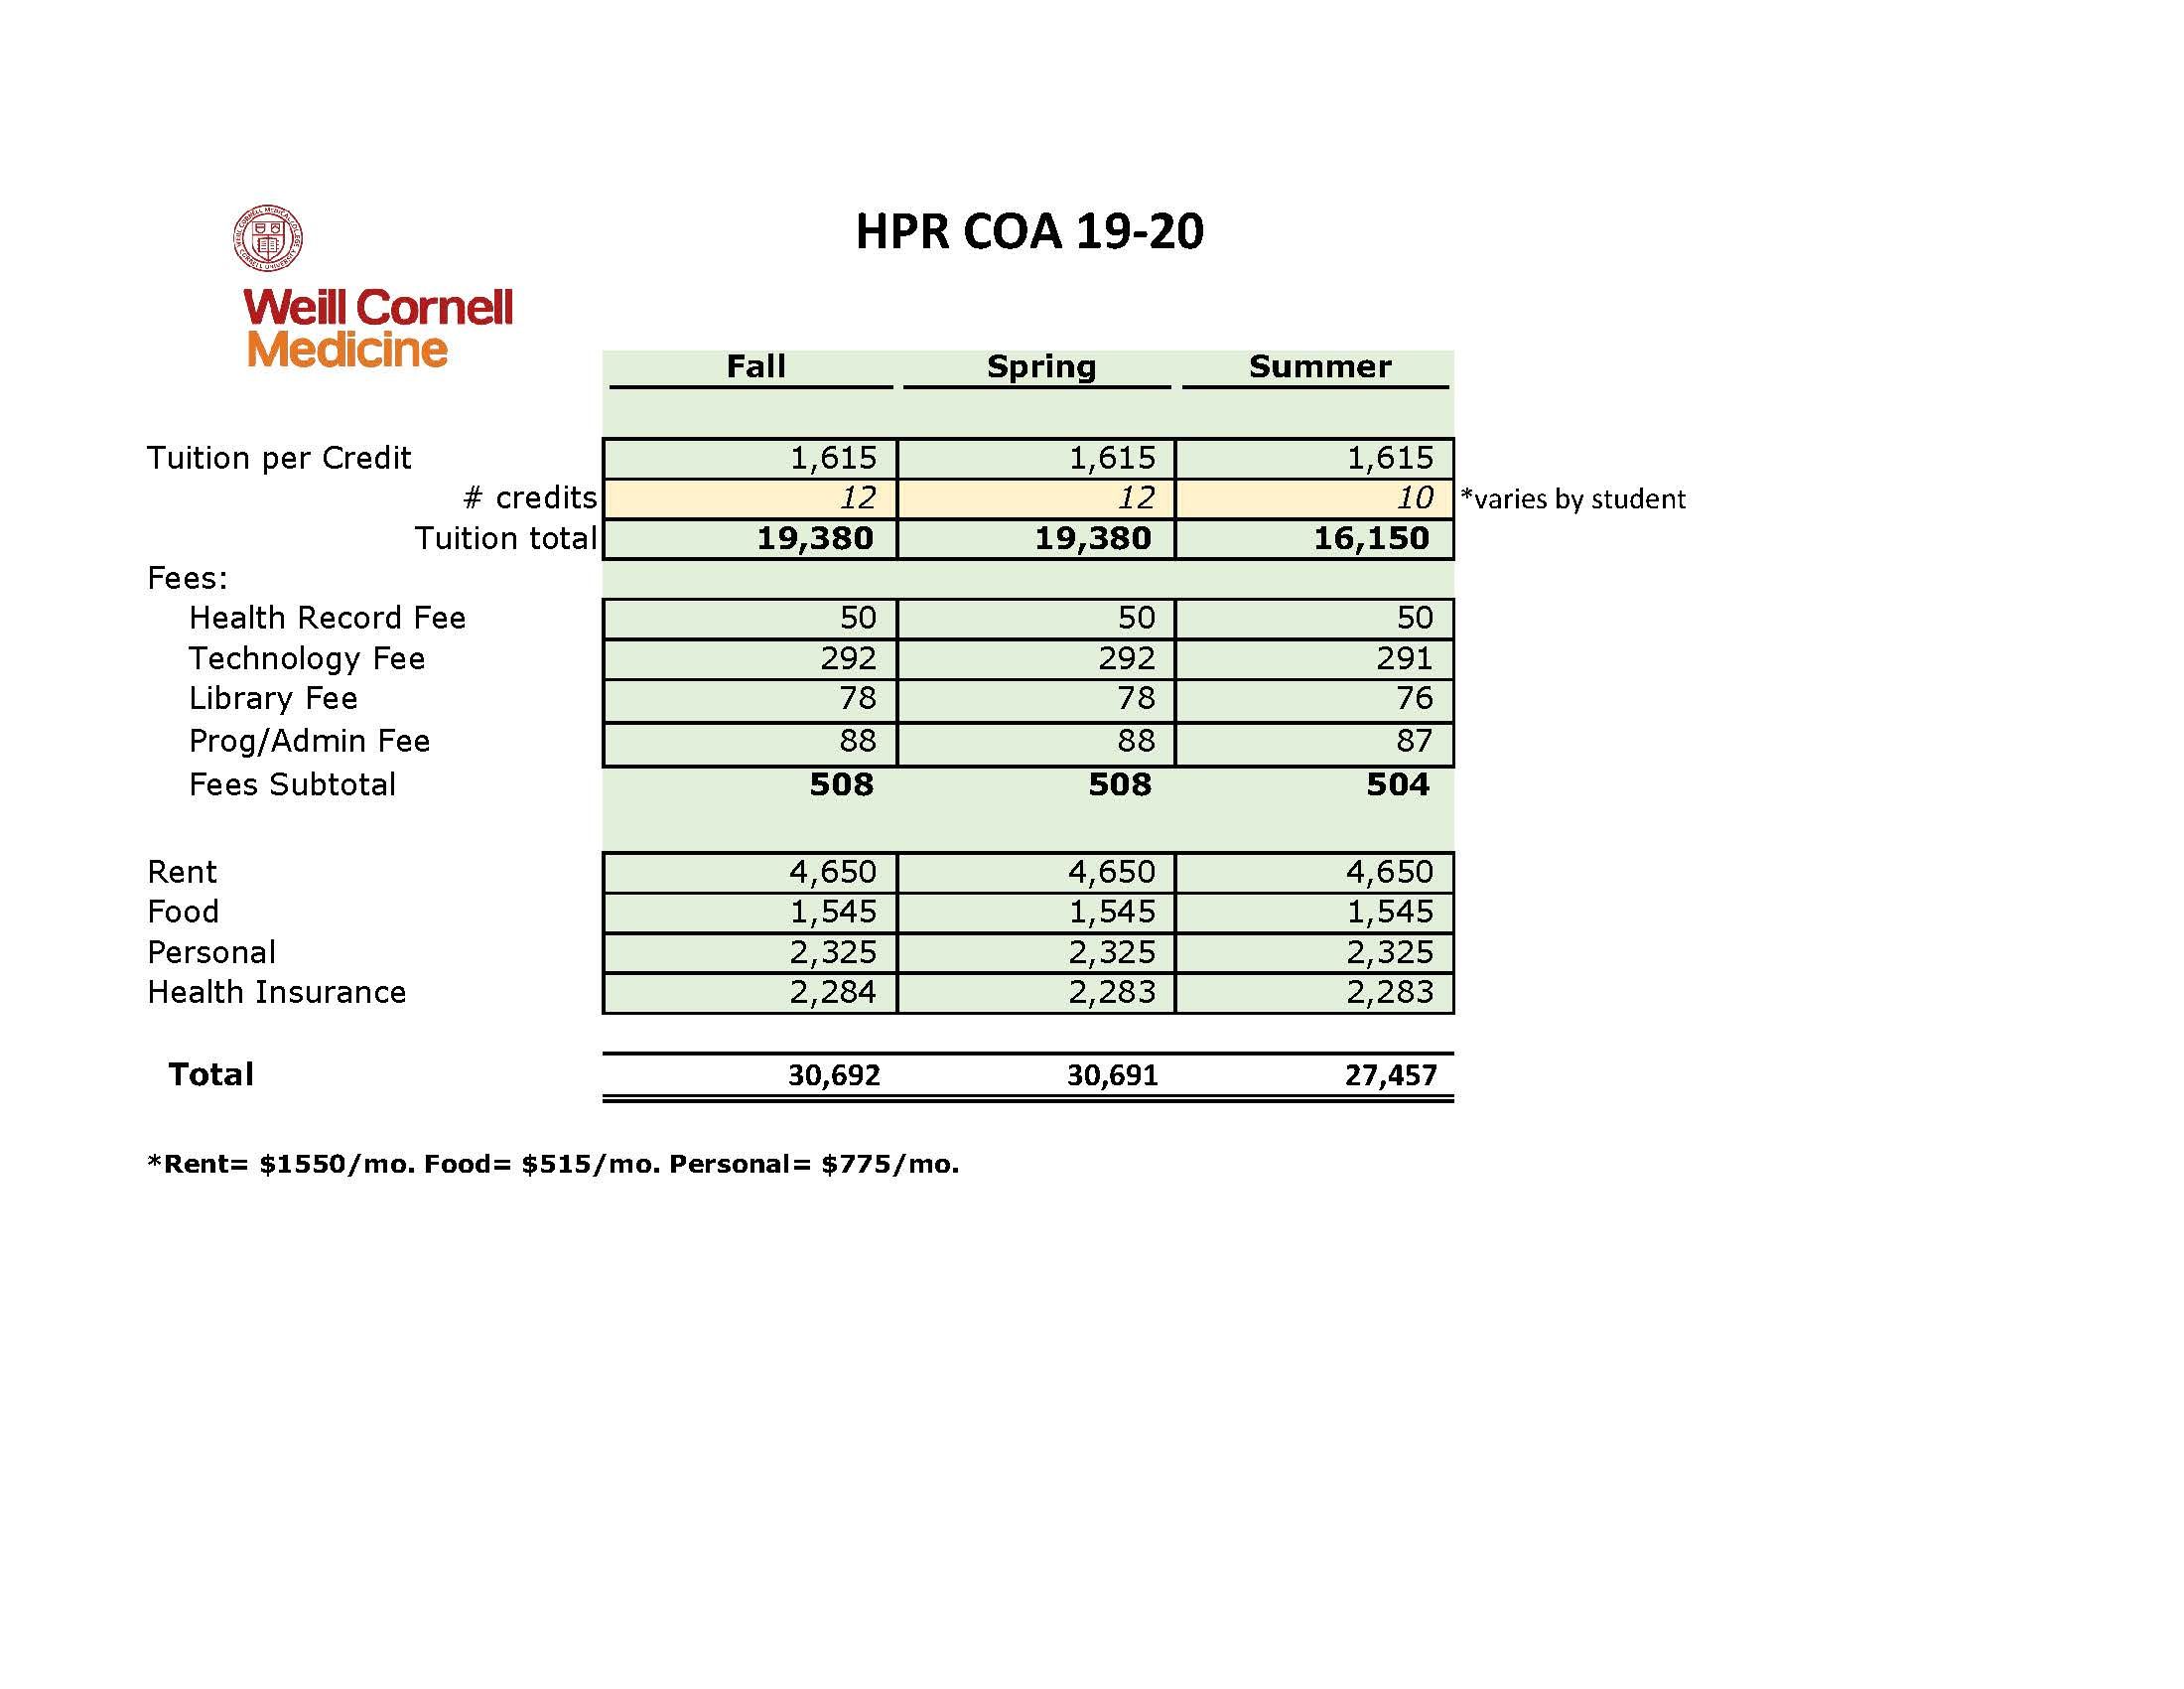 Cost of Attendance - HPR program - 2019-20